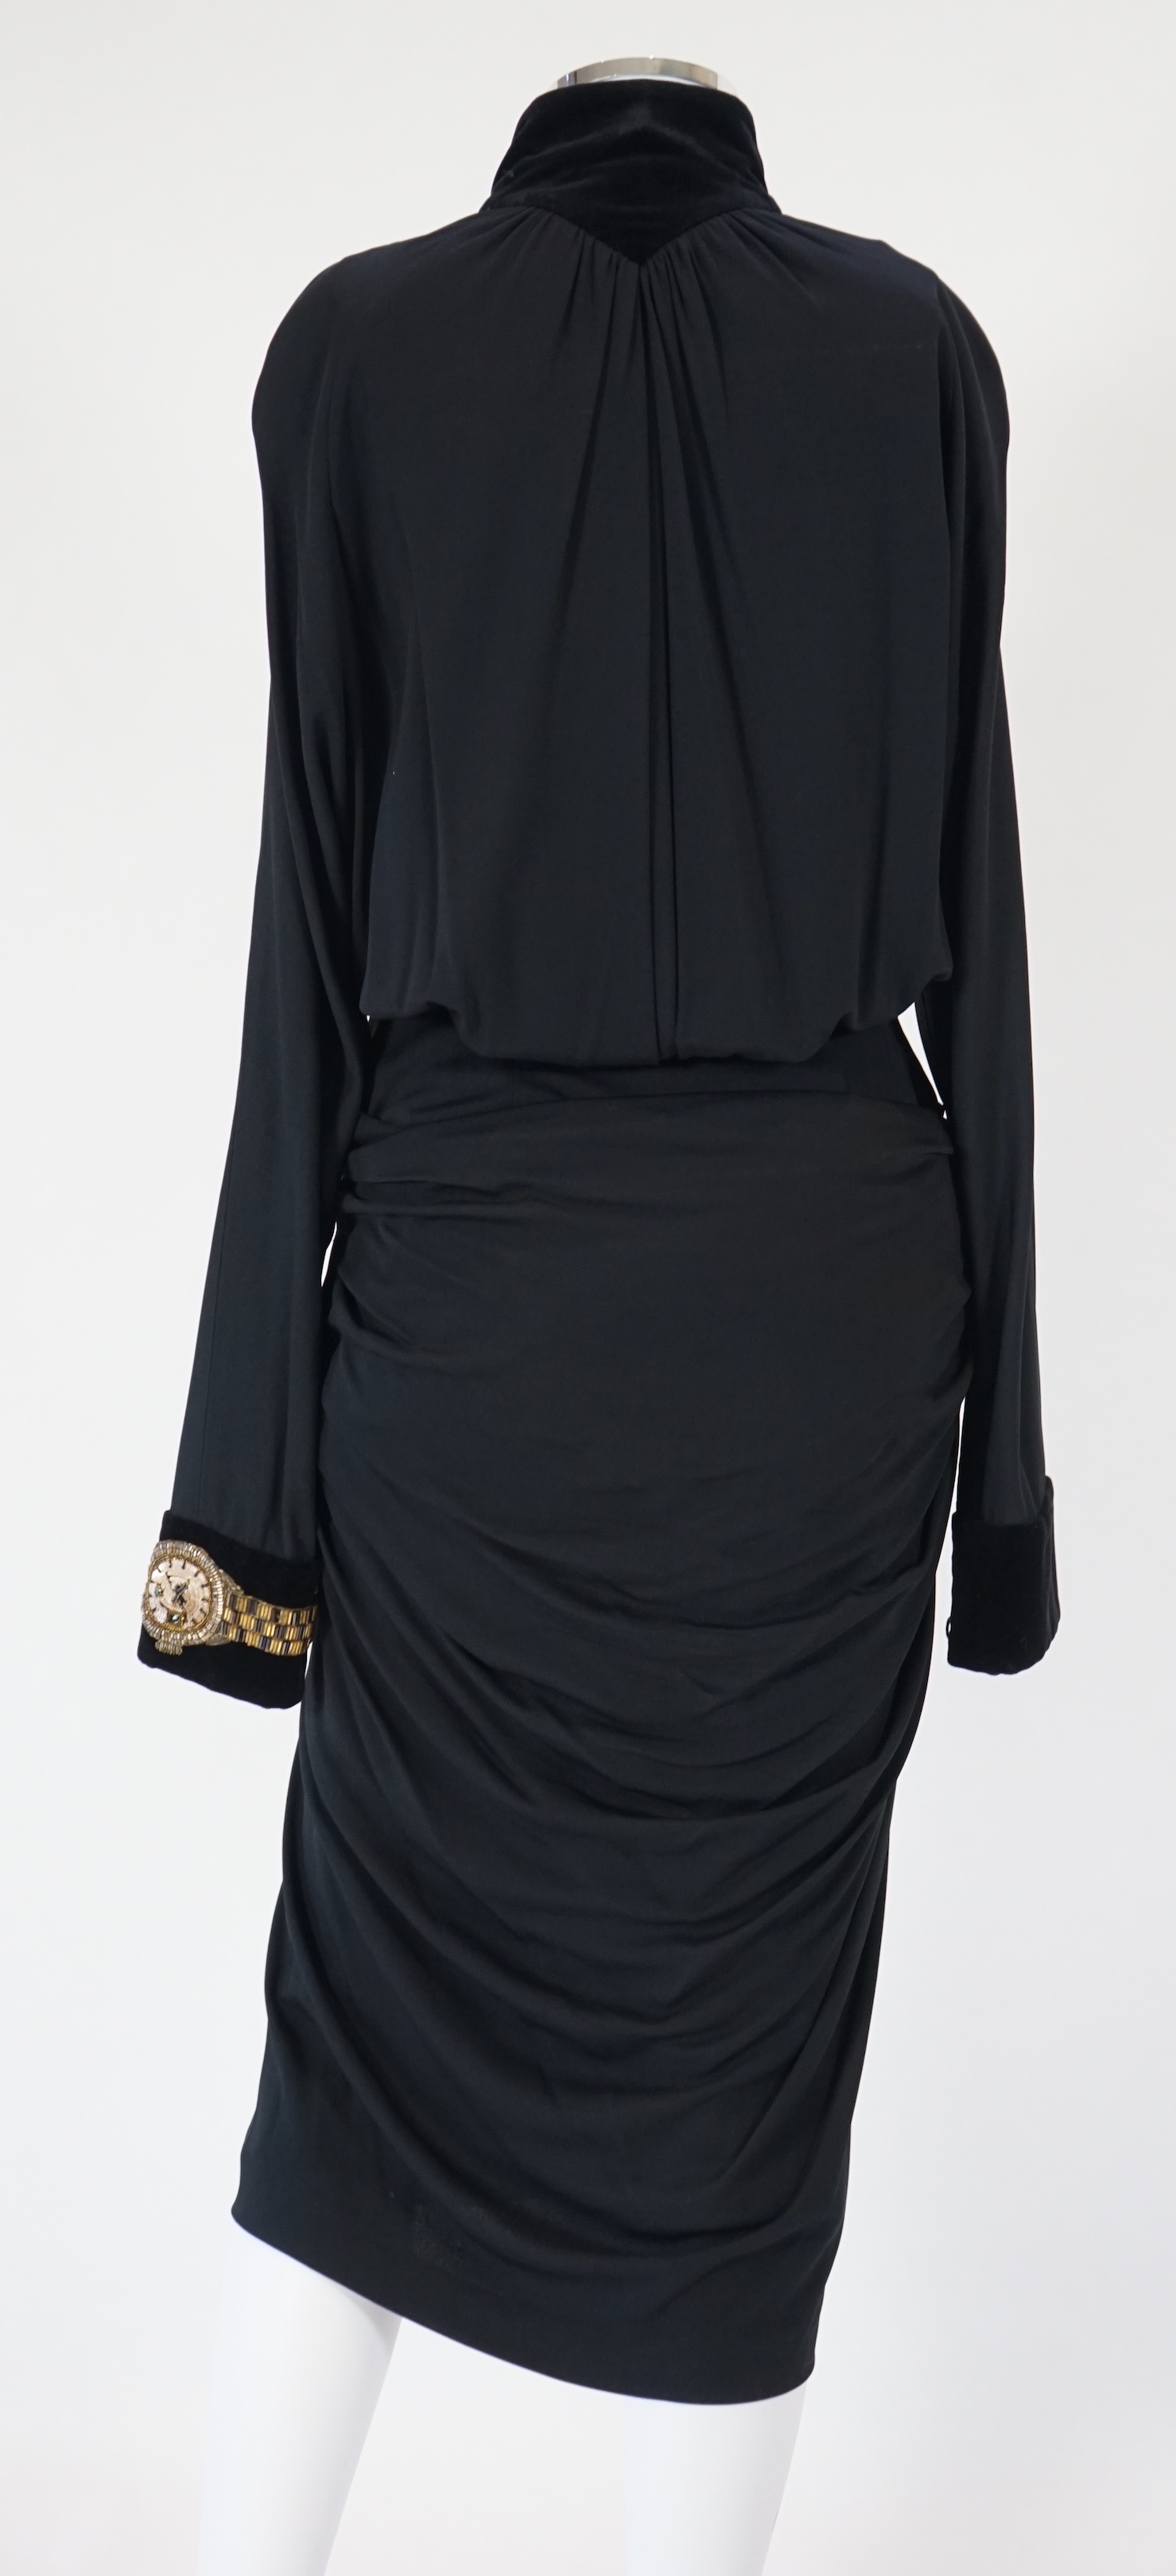 A Karl Lagerfeld black evening dress, stunning dress, velvet collar and velvet cuffs with gold - Image 8 of 11